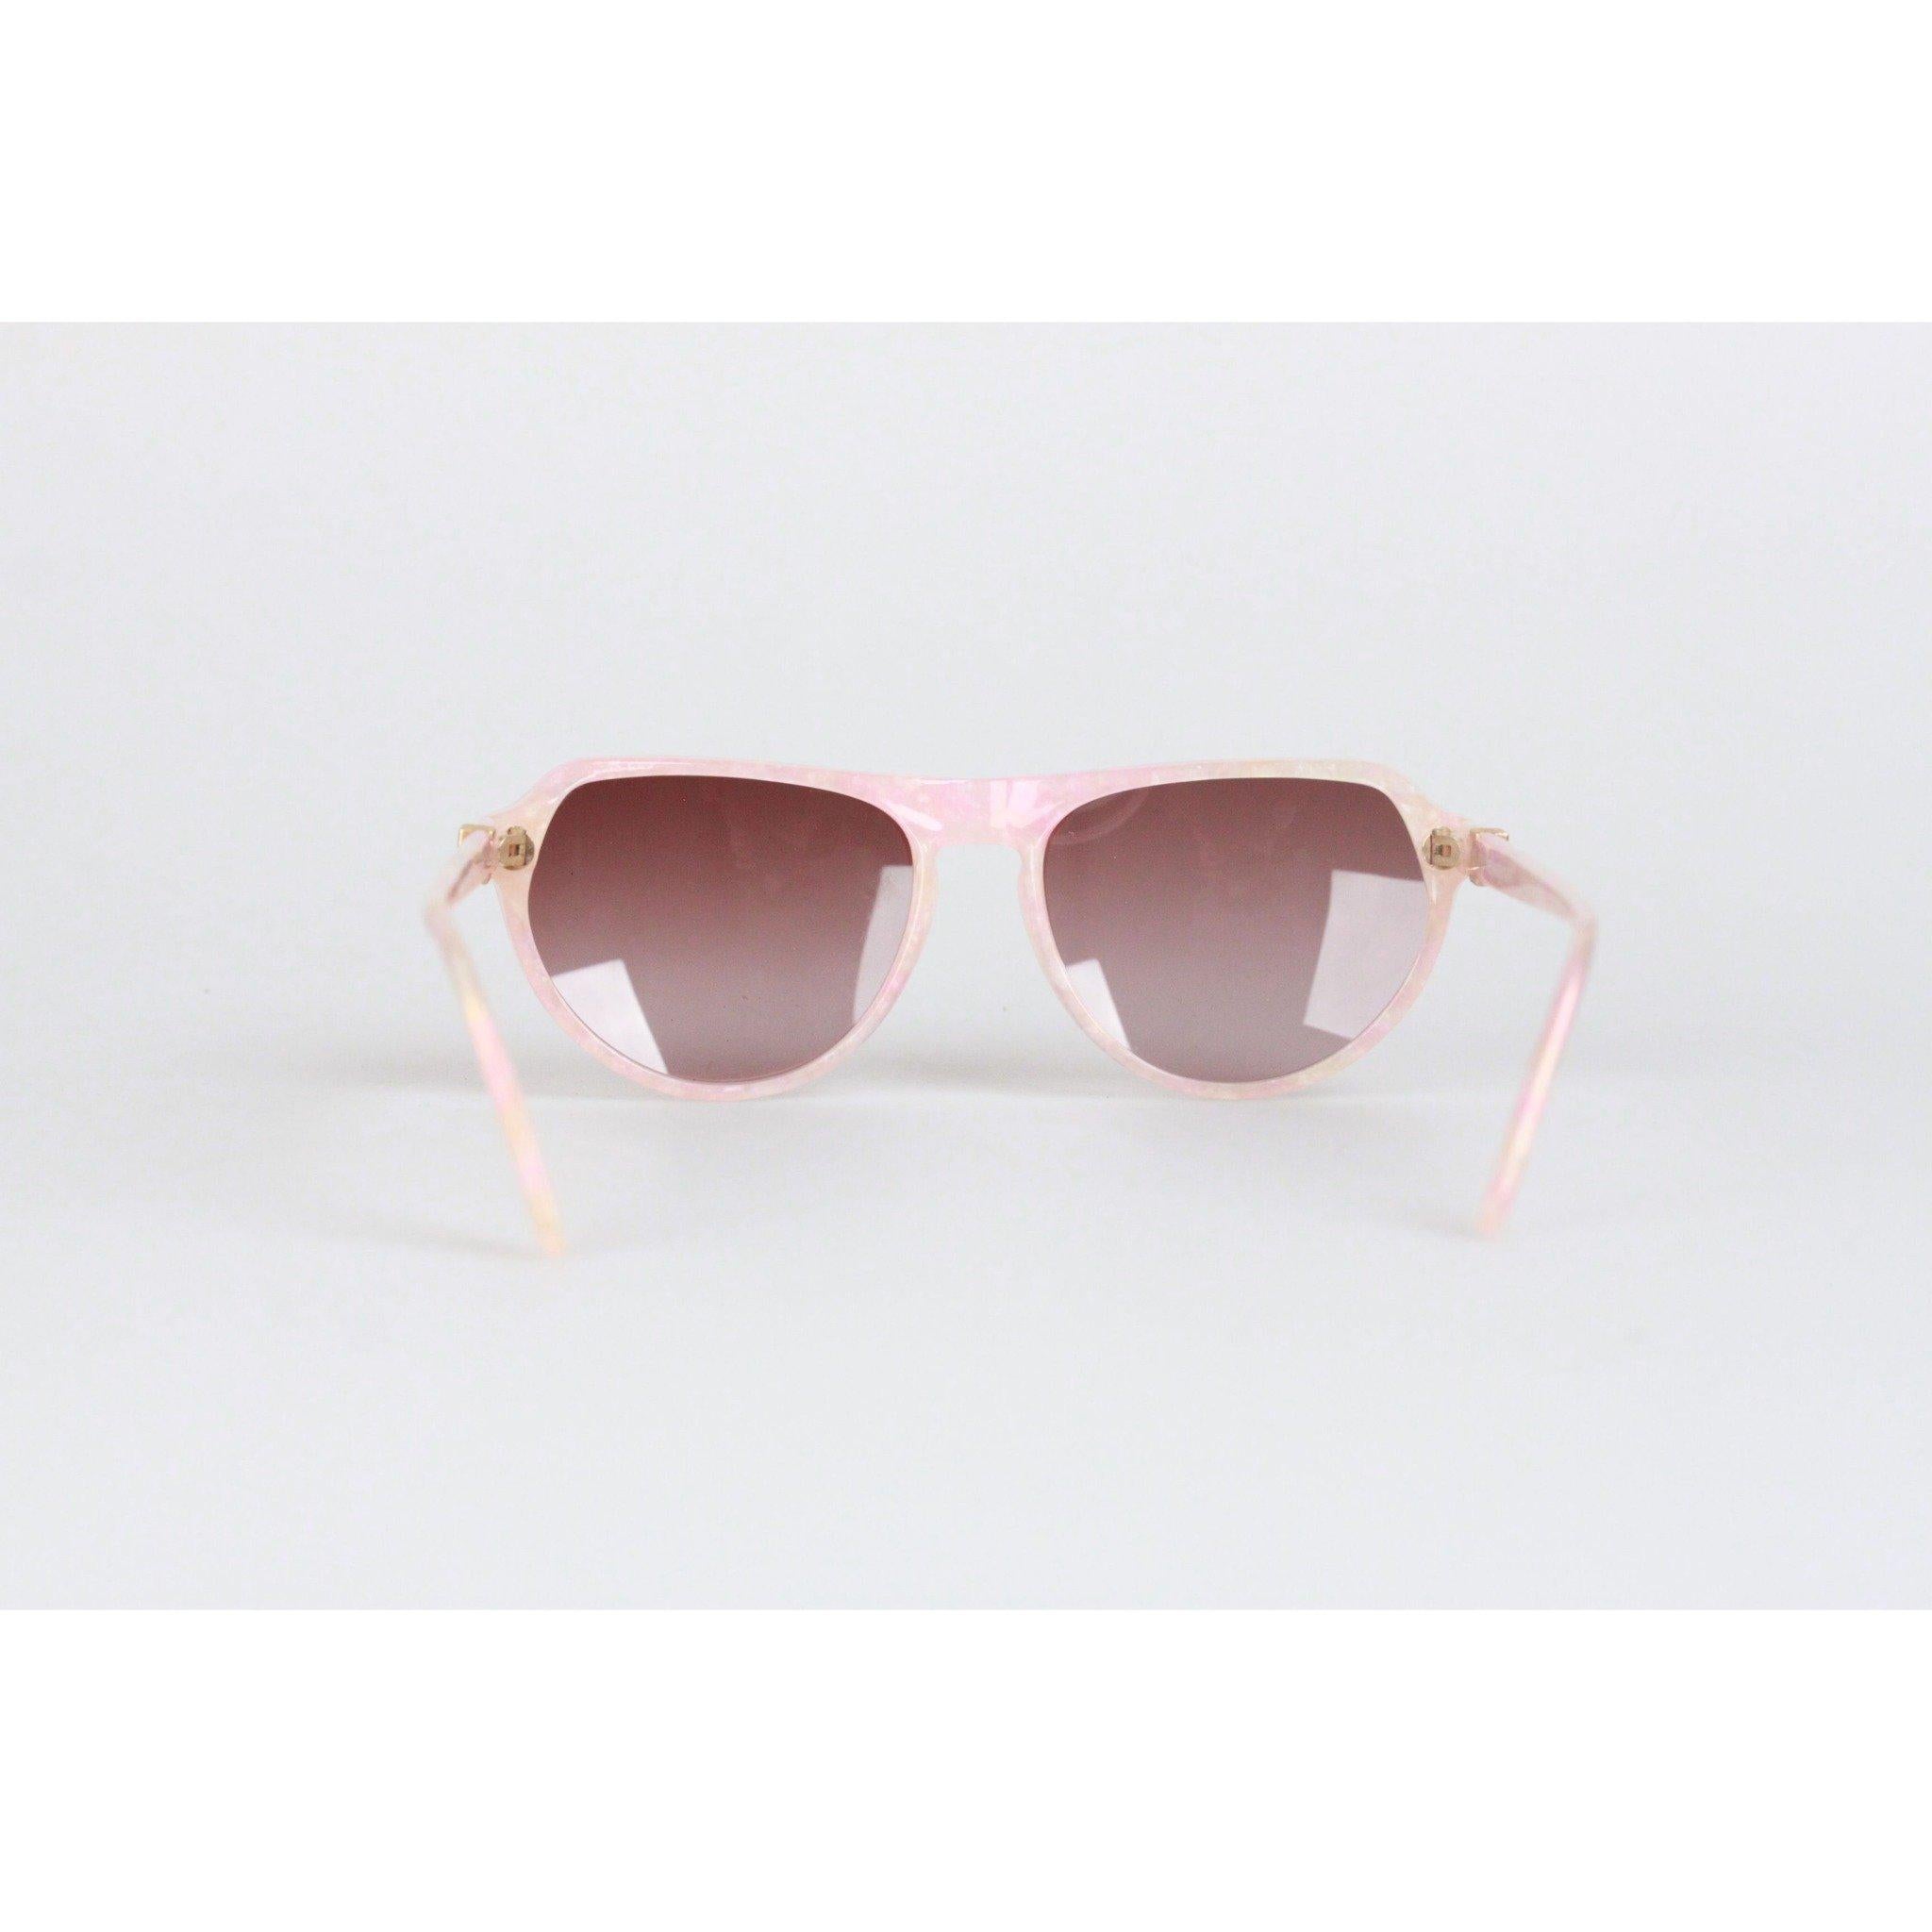 Yves Saint Laurent Yves Saint Laurent Vintage Pink Sunglasses Mod. Priam 54mm 1